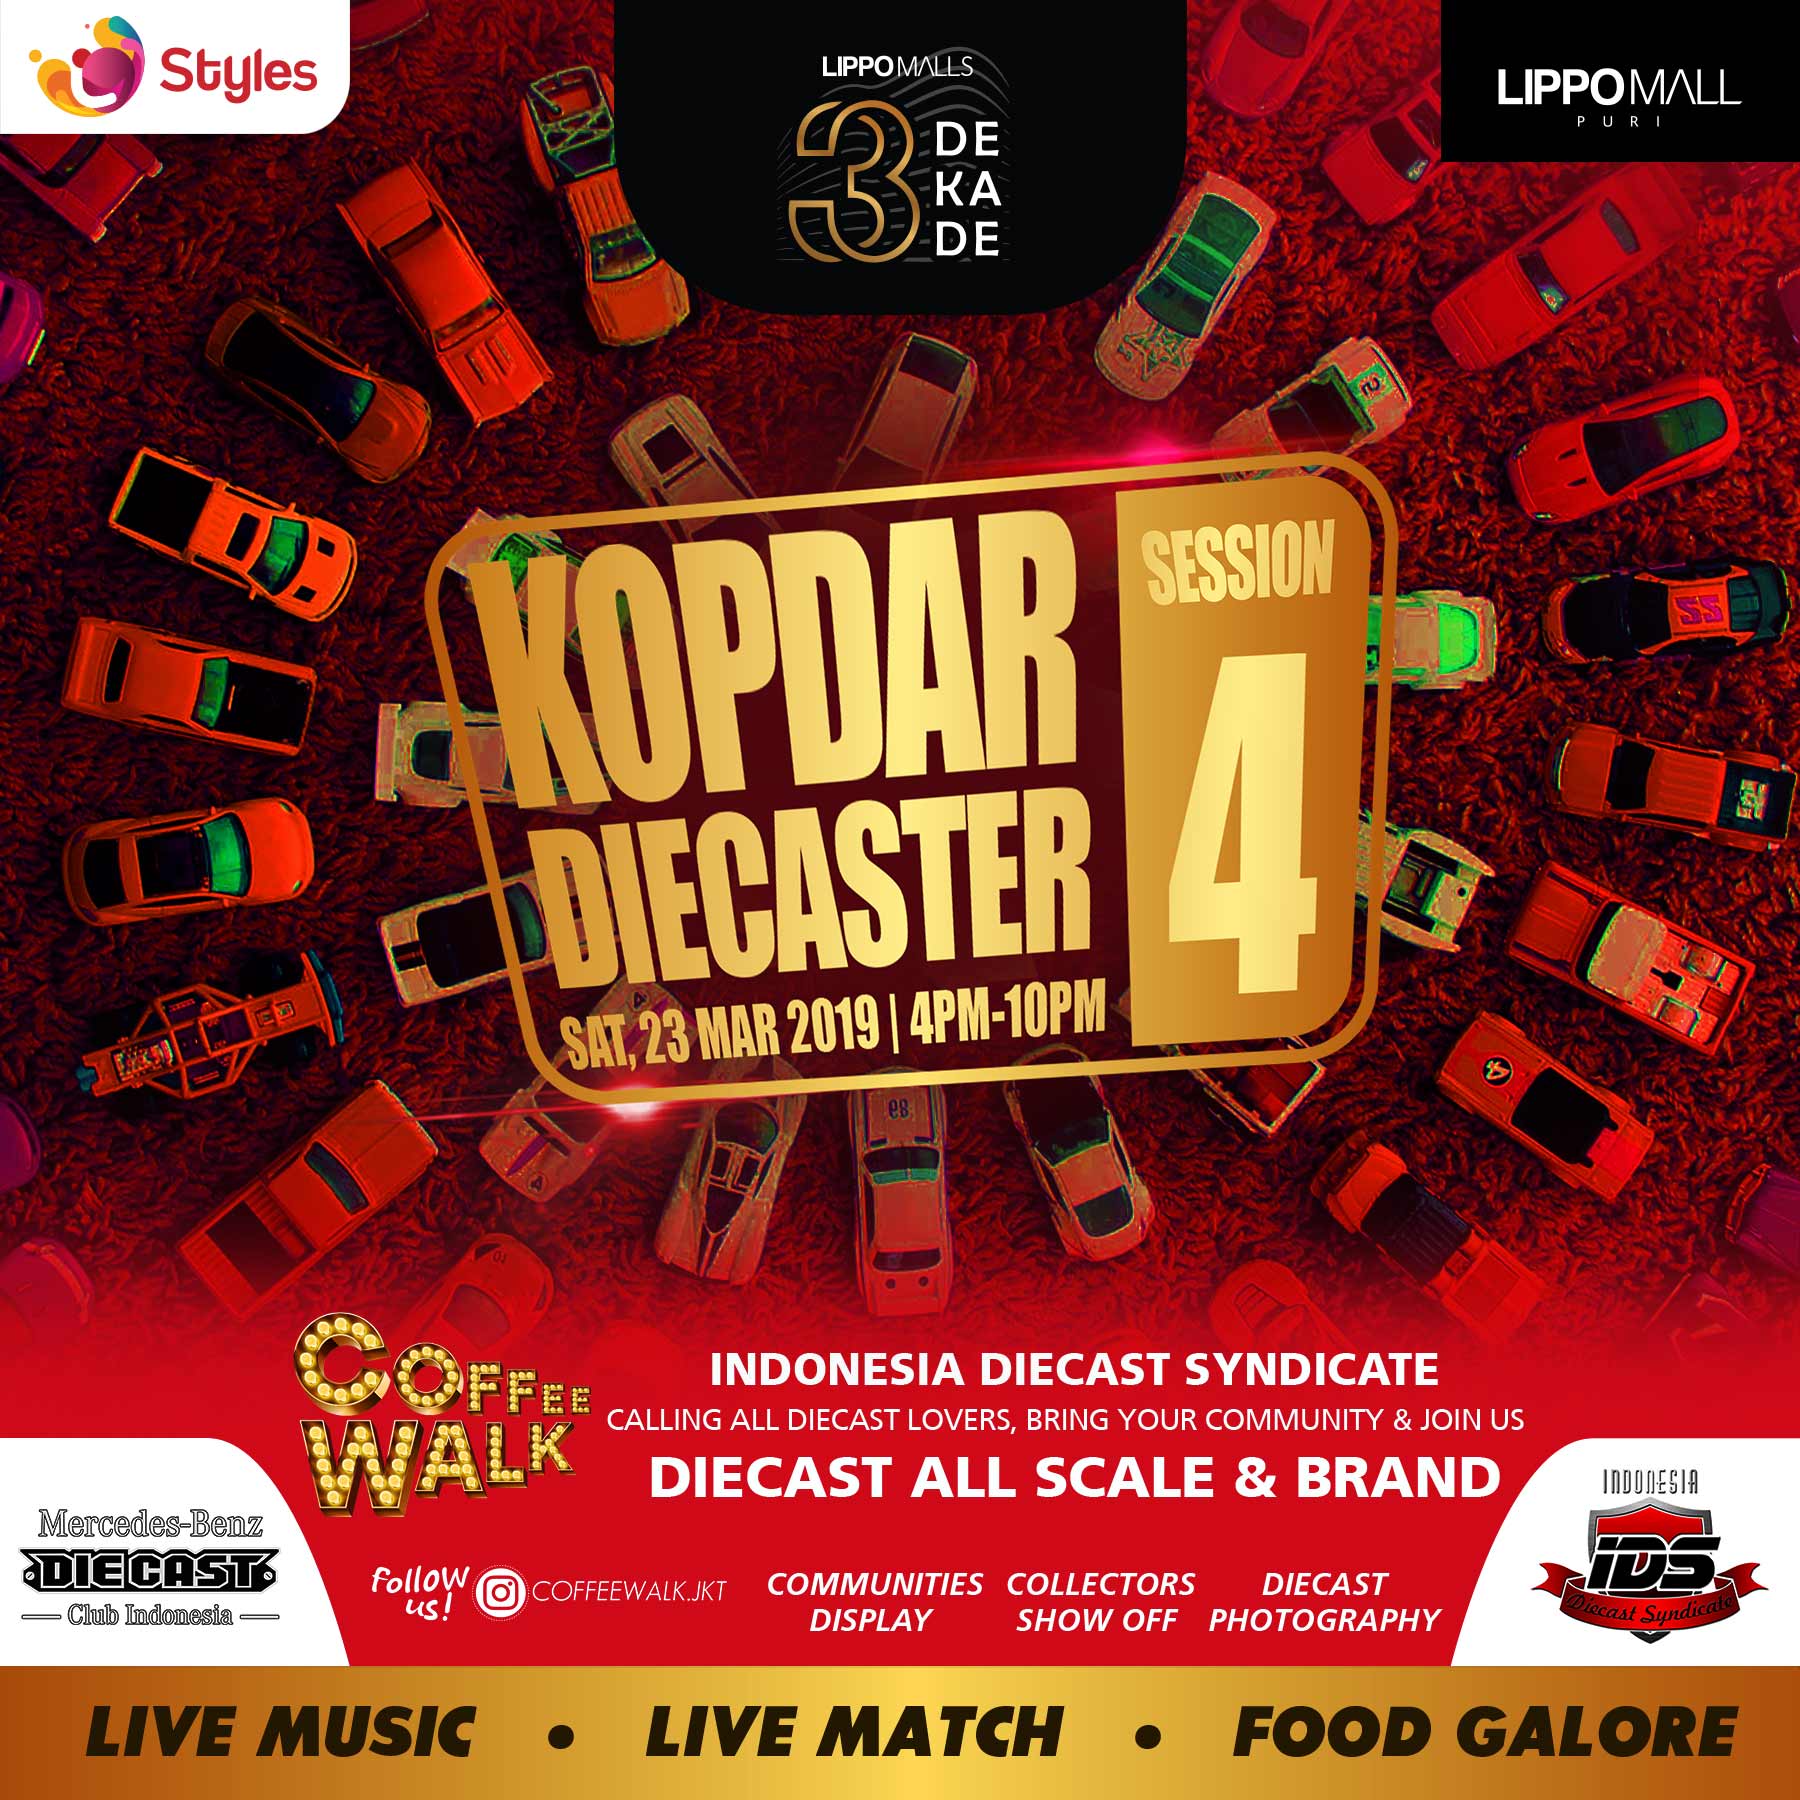 kopdar diecaster session 4 event in lippo mall puri st. moritz